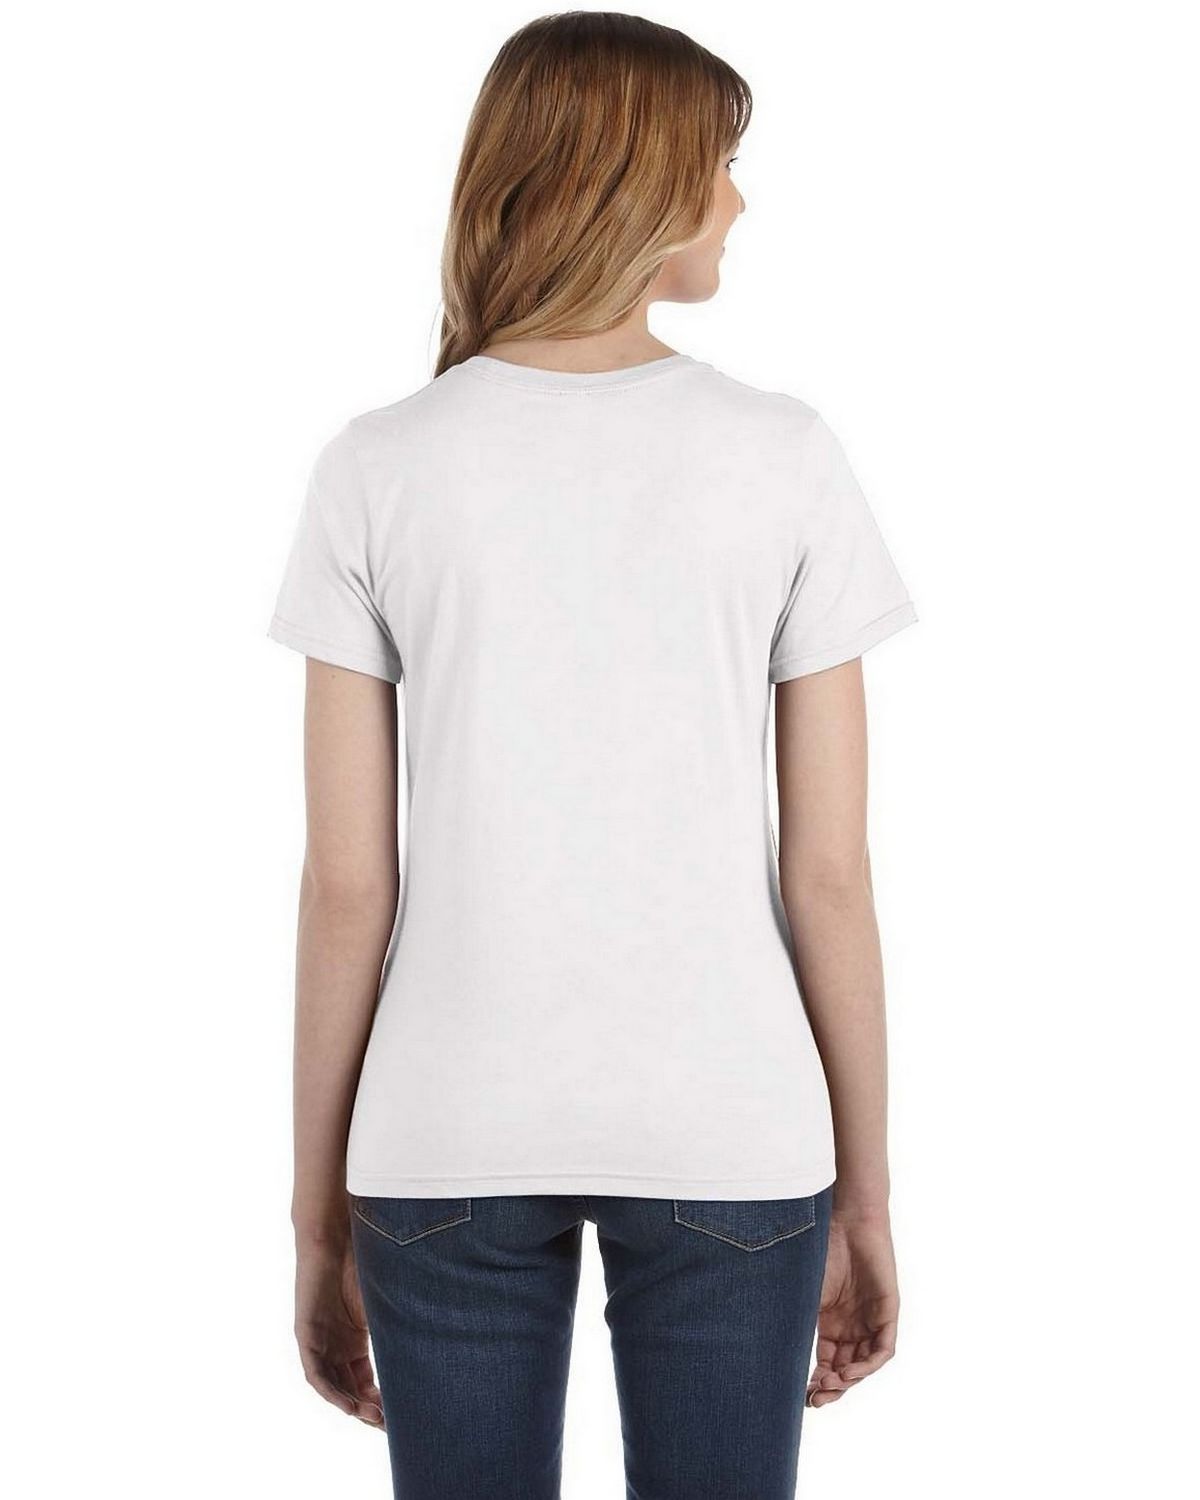 Camiseta básica mujer ANVIL 880, compra online